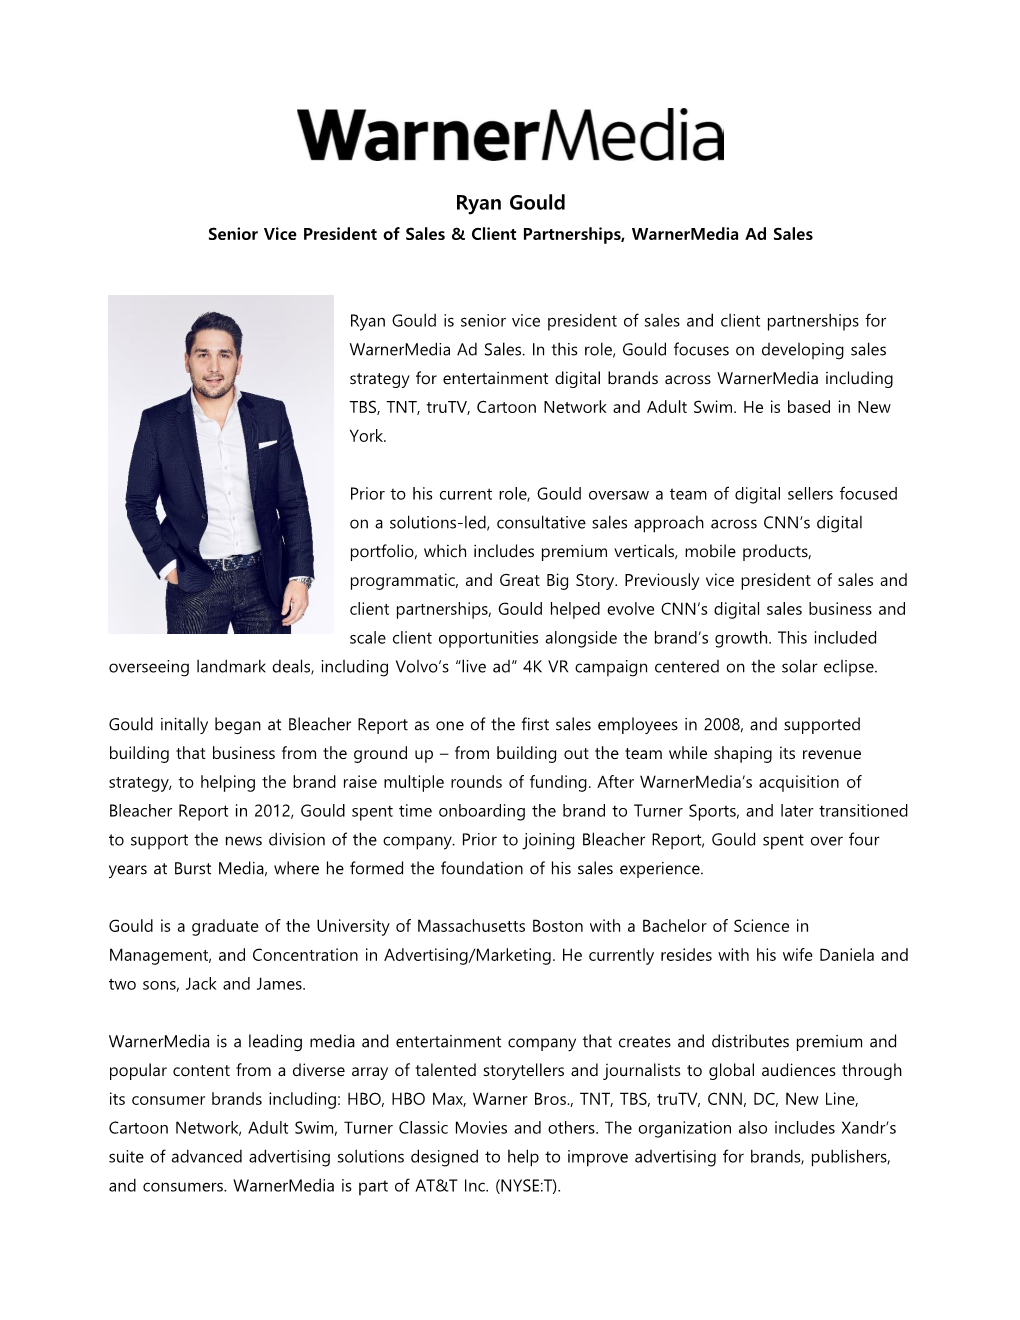 Ryan Gould Senior Vice President of Sales & Client Partnerships, Warnermedia Ad Sales